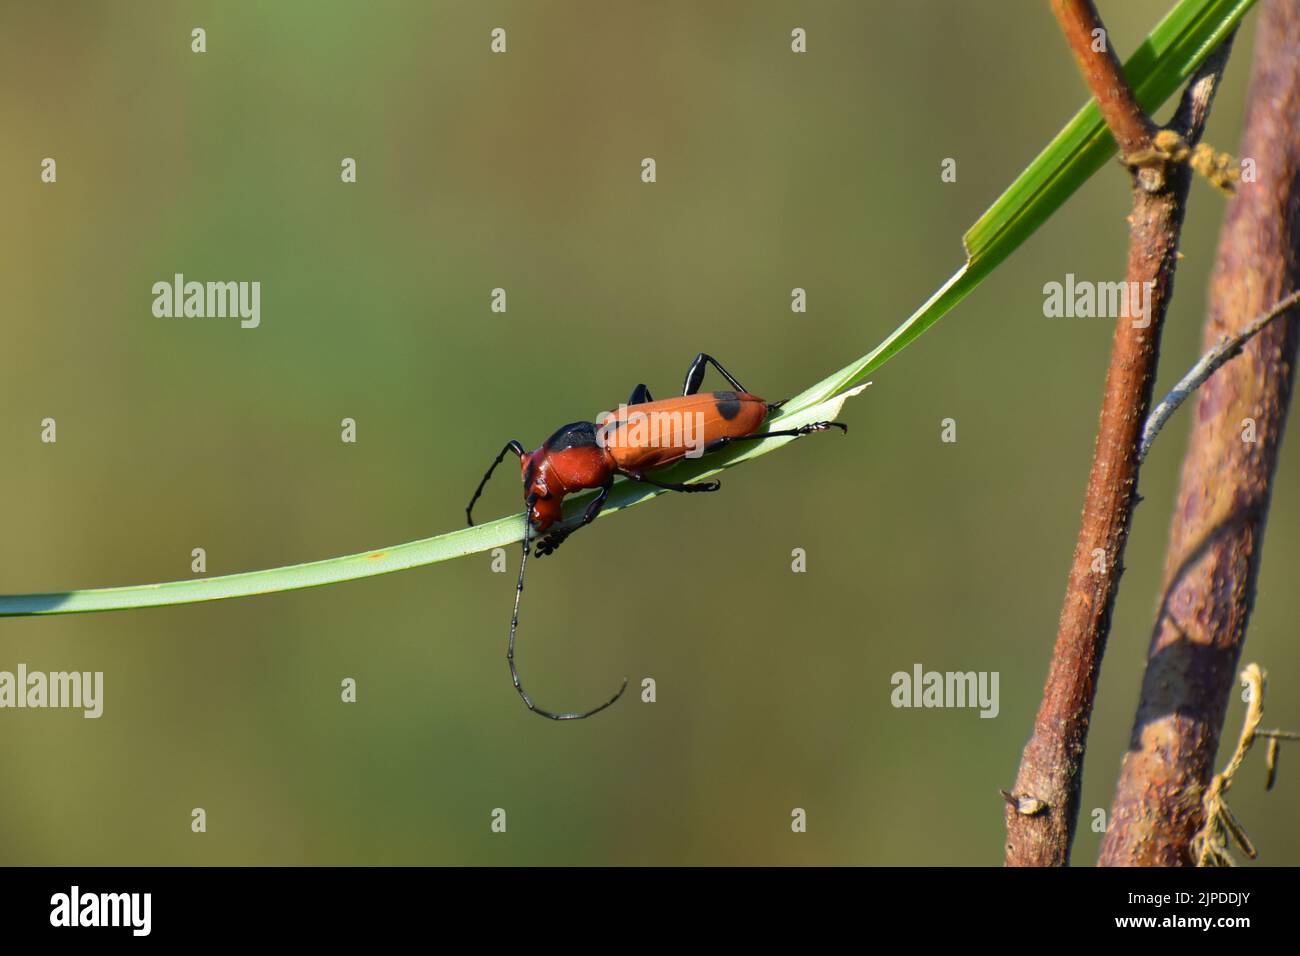 An orange longhorn beetle crossing on a grass blade against blur background. Java. Euryphagus. Stock Photo